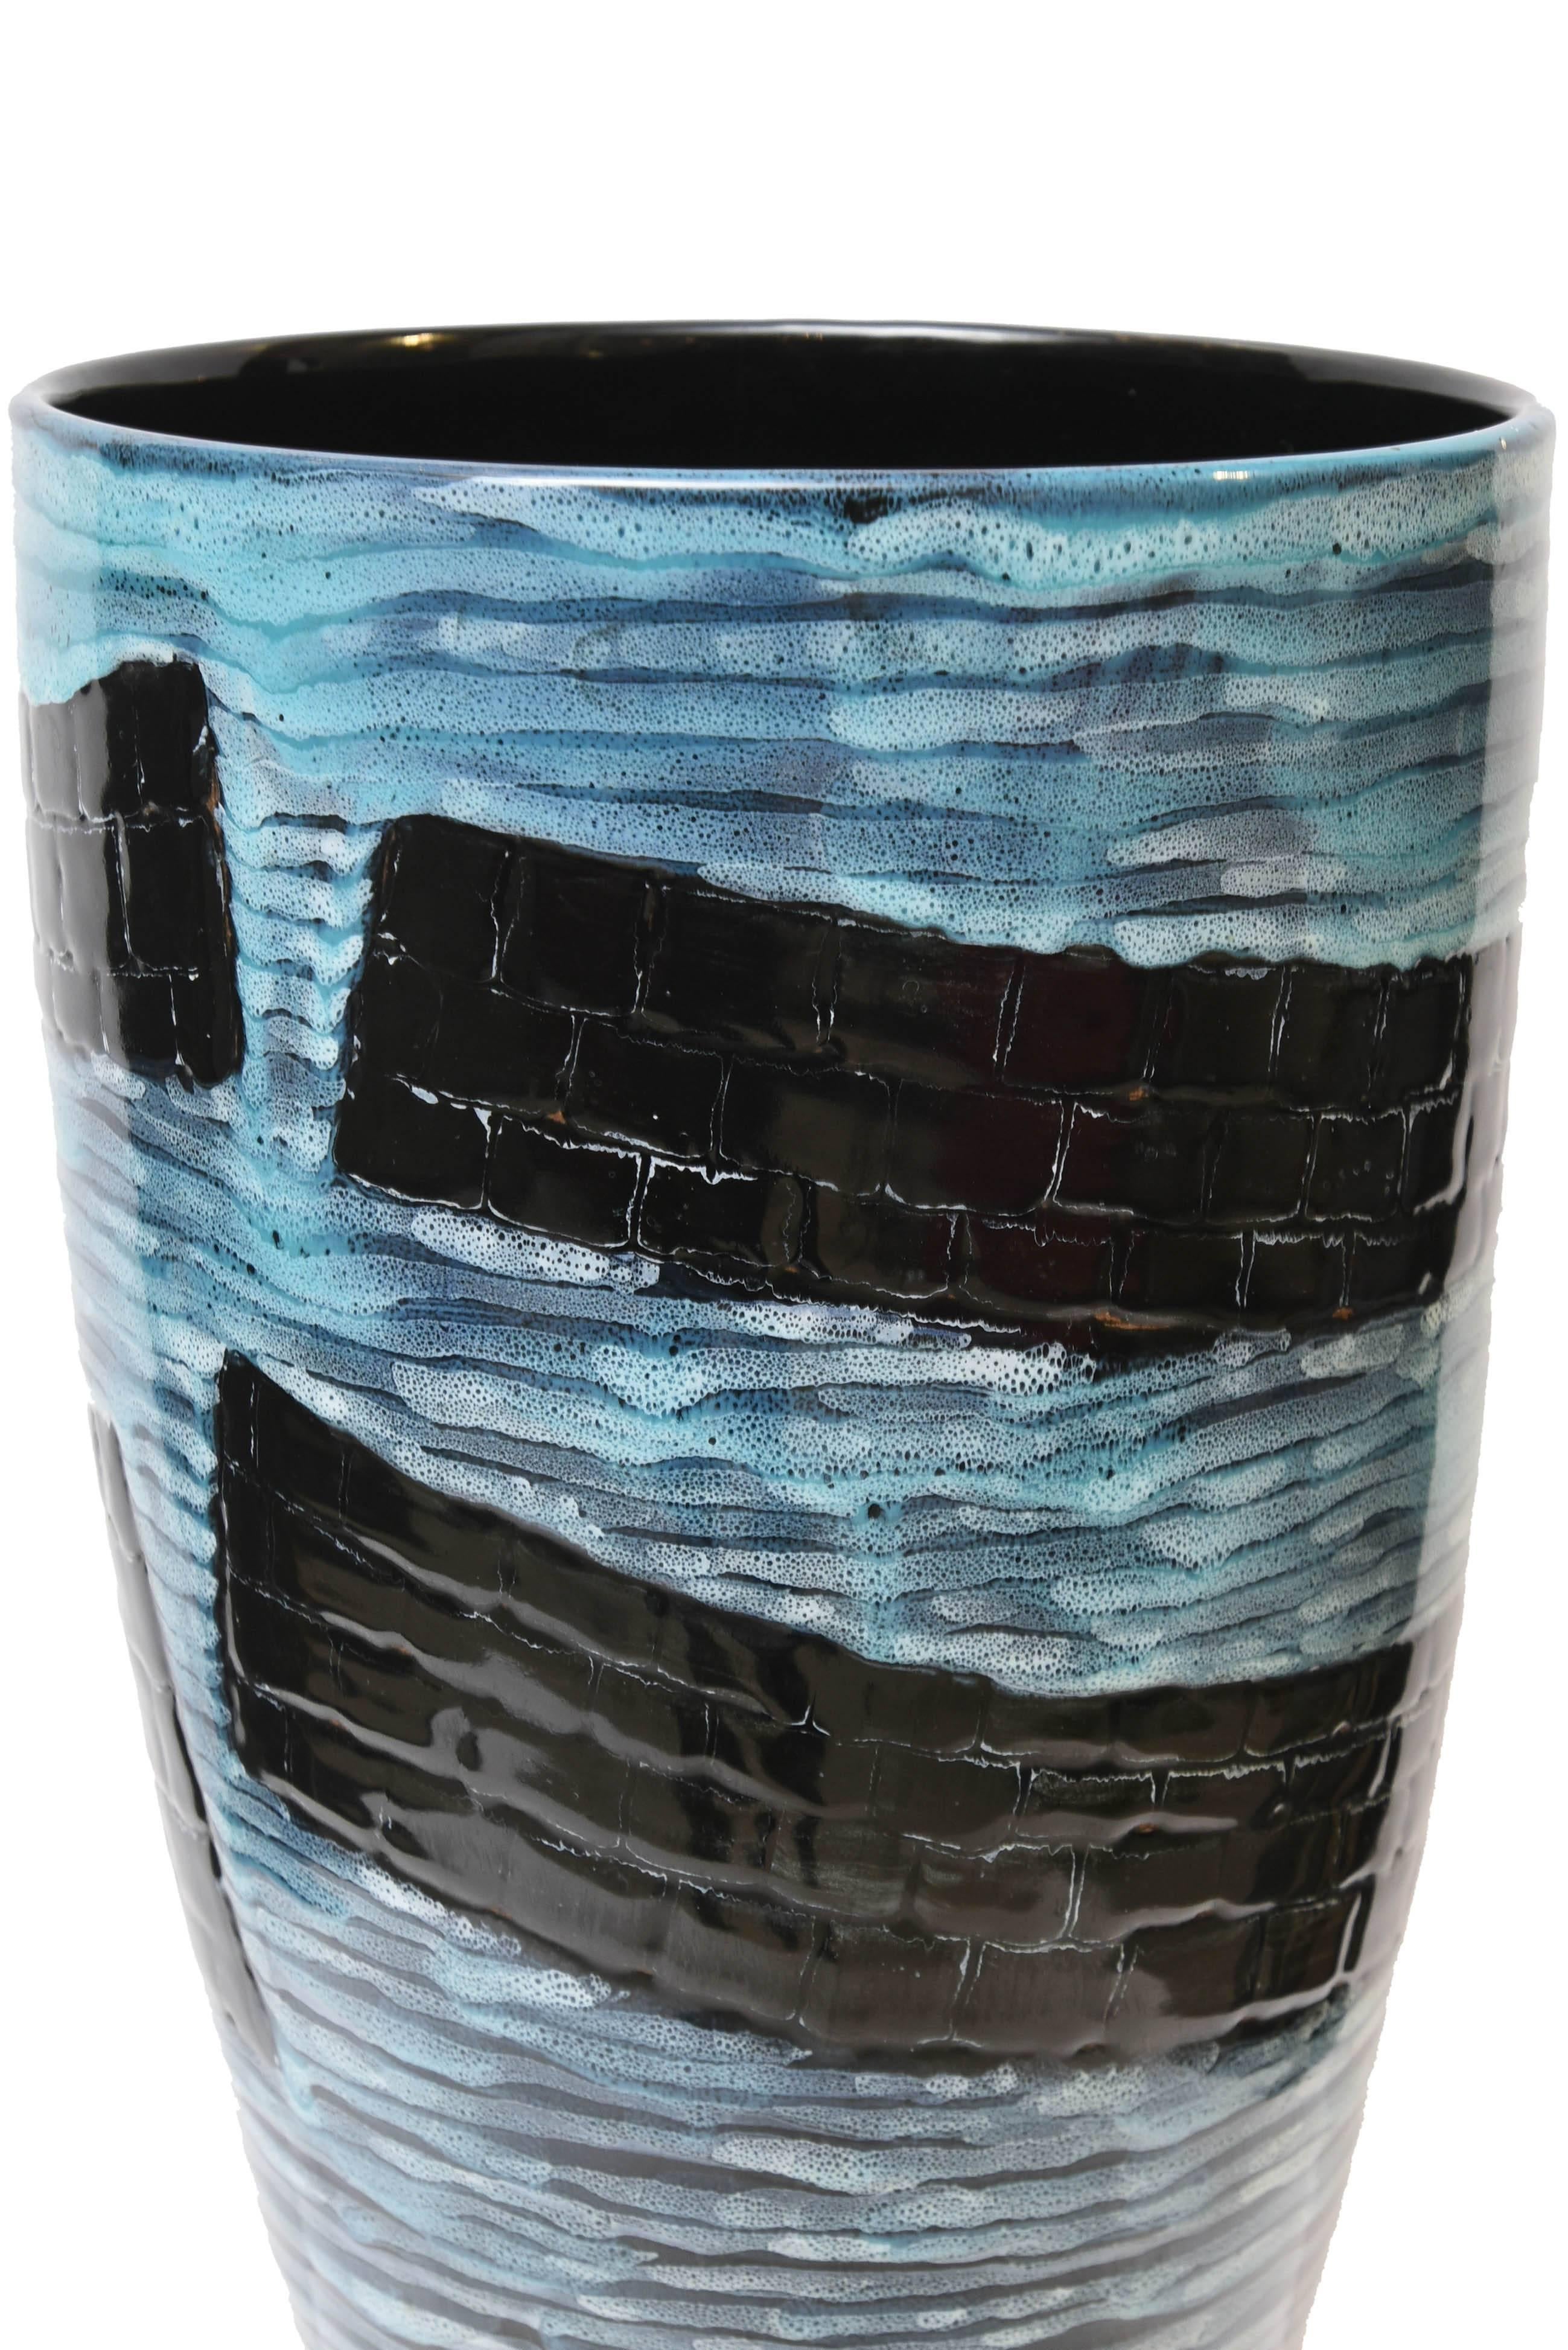 Italian San Polo Otello Rosa's Majolica Vase, Light Blue, White and Black Mosaic Pattern